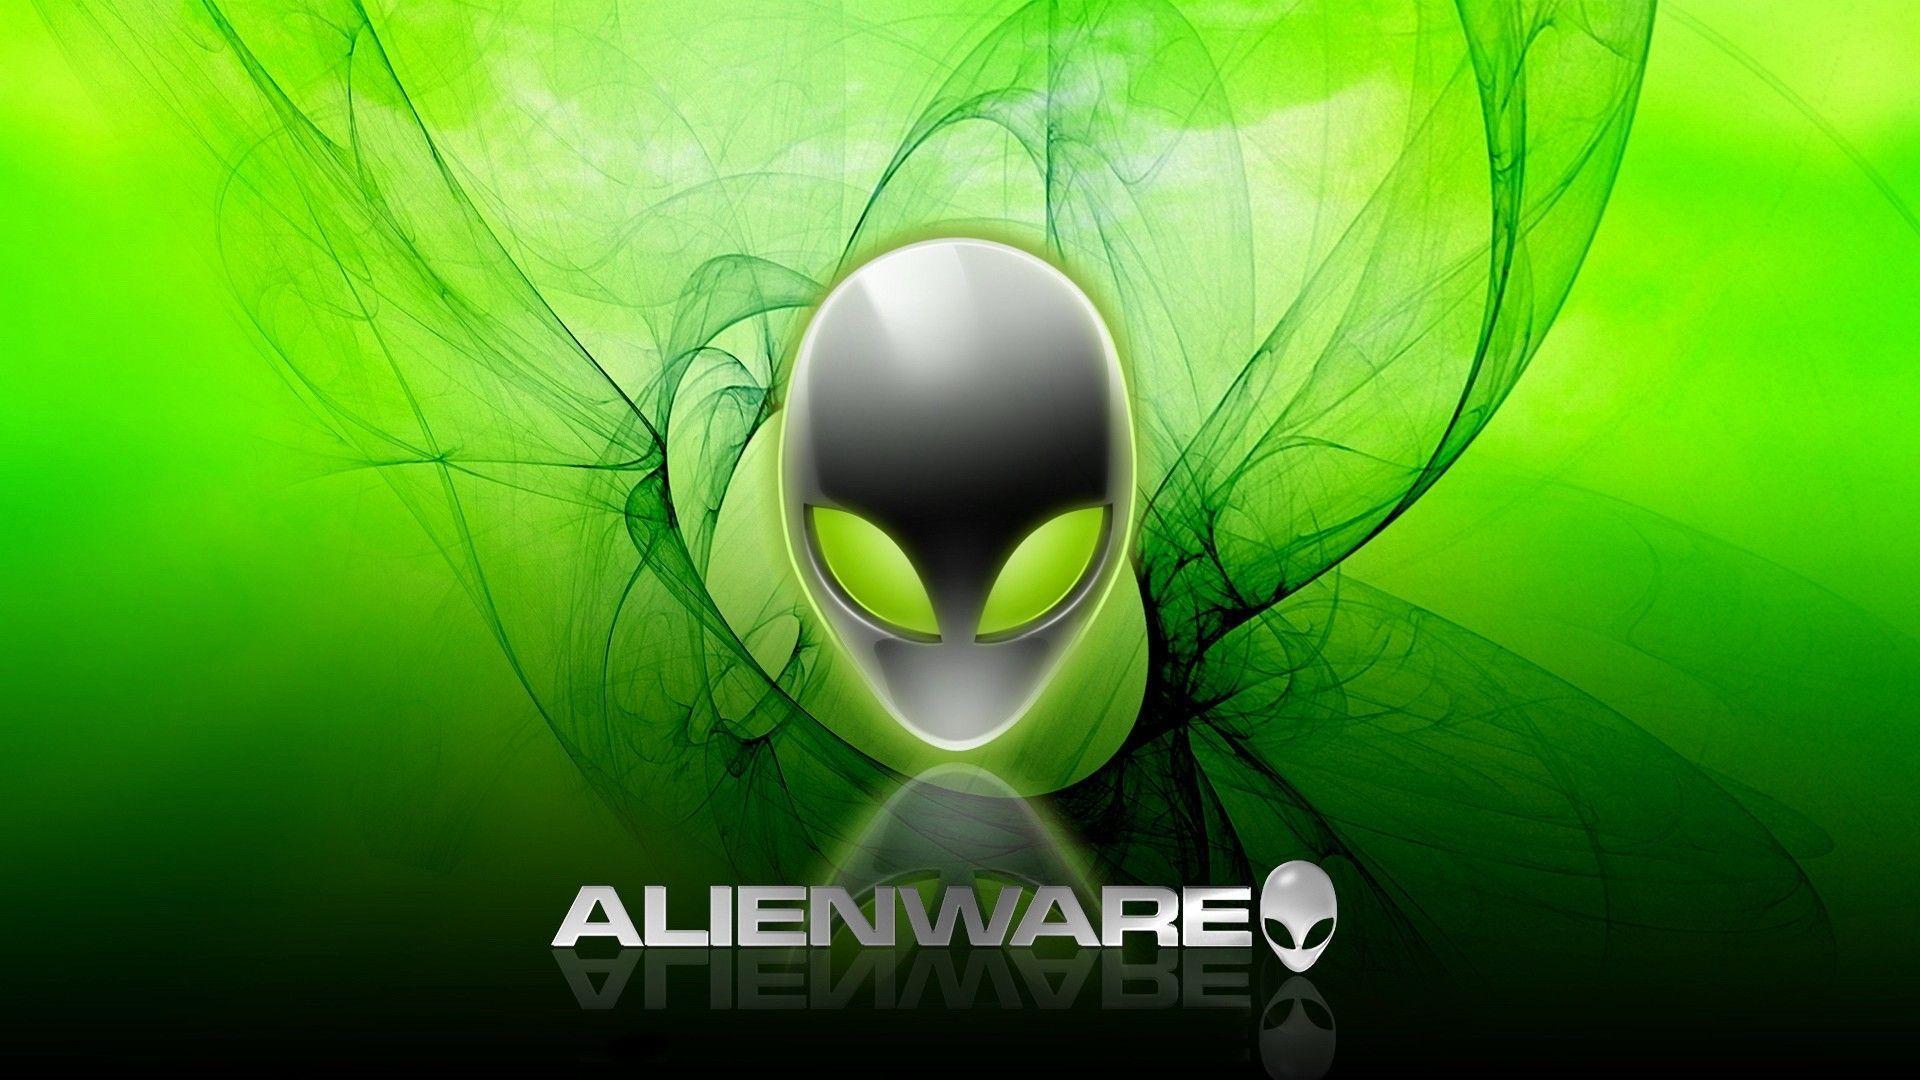 Astonishing Green Alienware Wallpaper HD 1920x1080PX Alienware